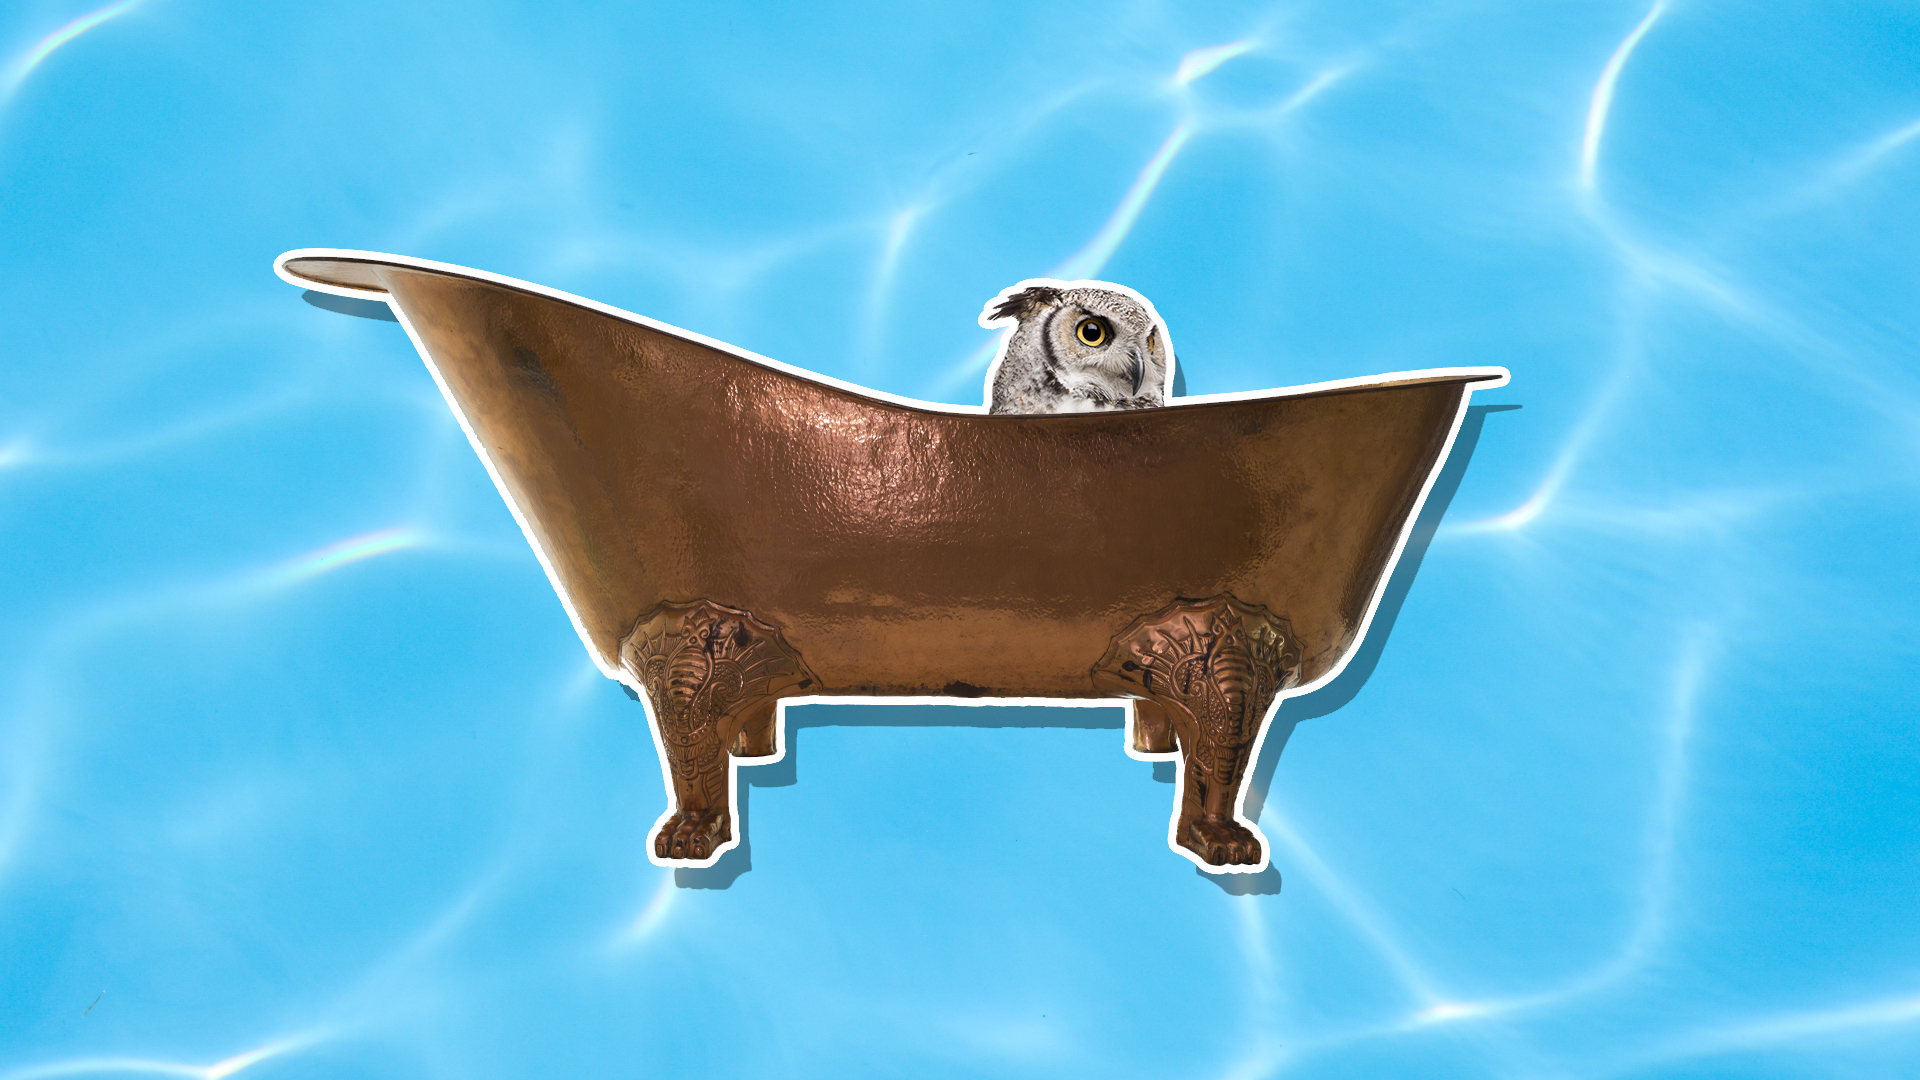 An owl in a copper bath